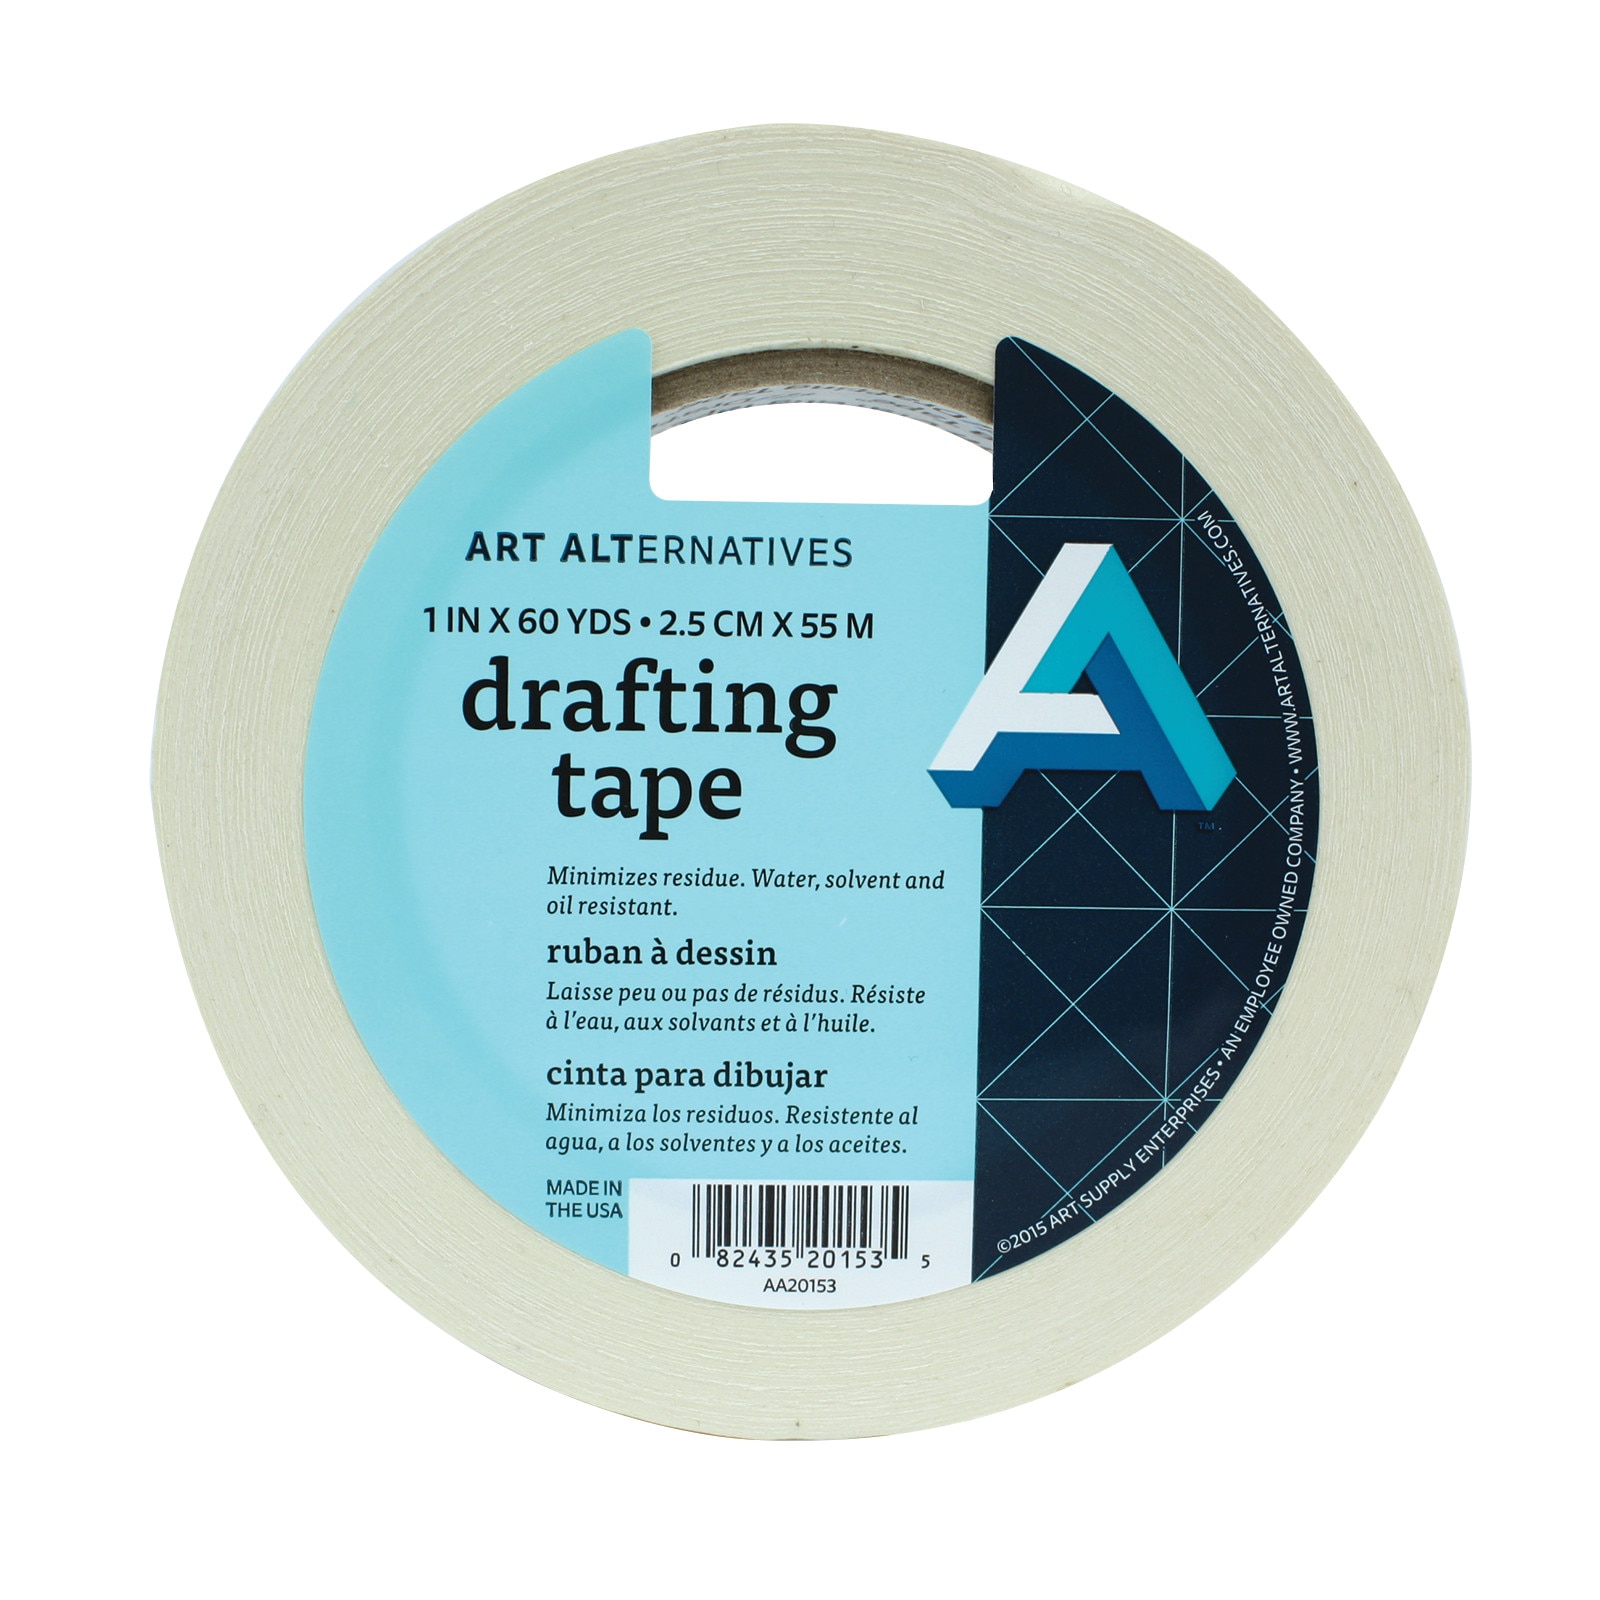 Art Alternatives Drafting Tape, 1" x 60 yds.